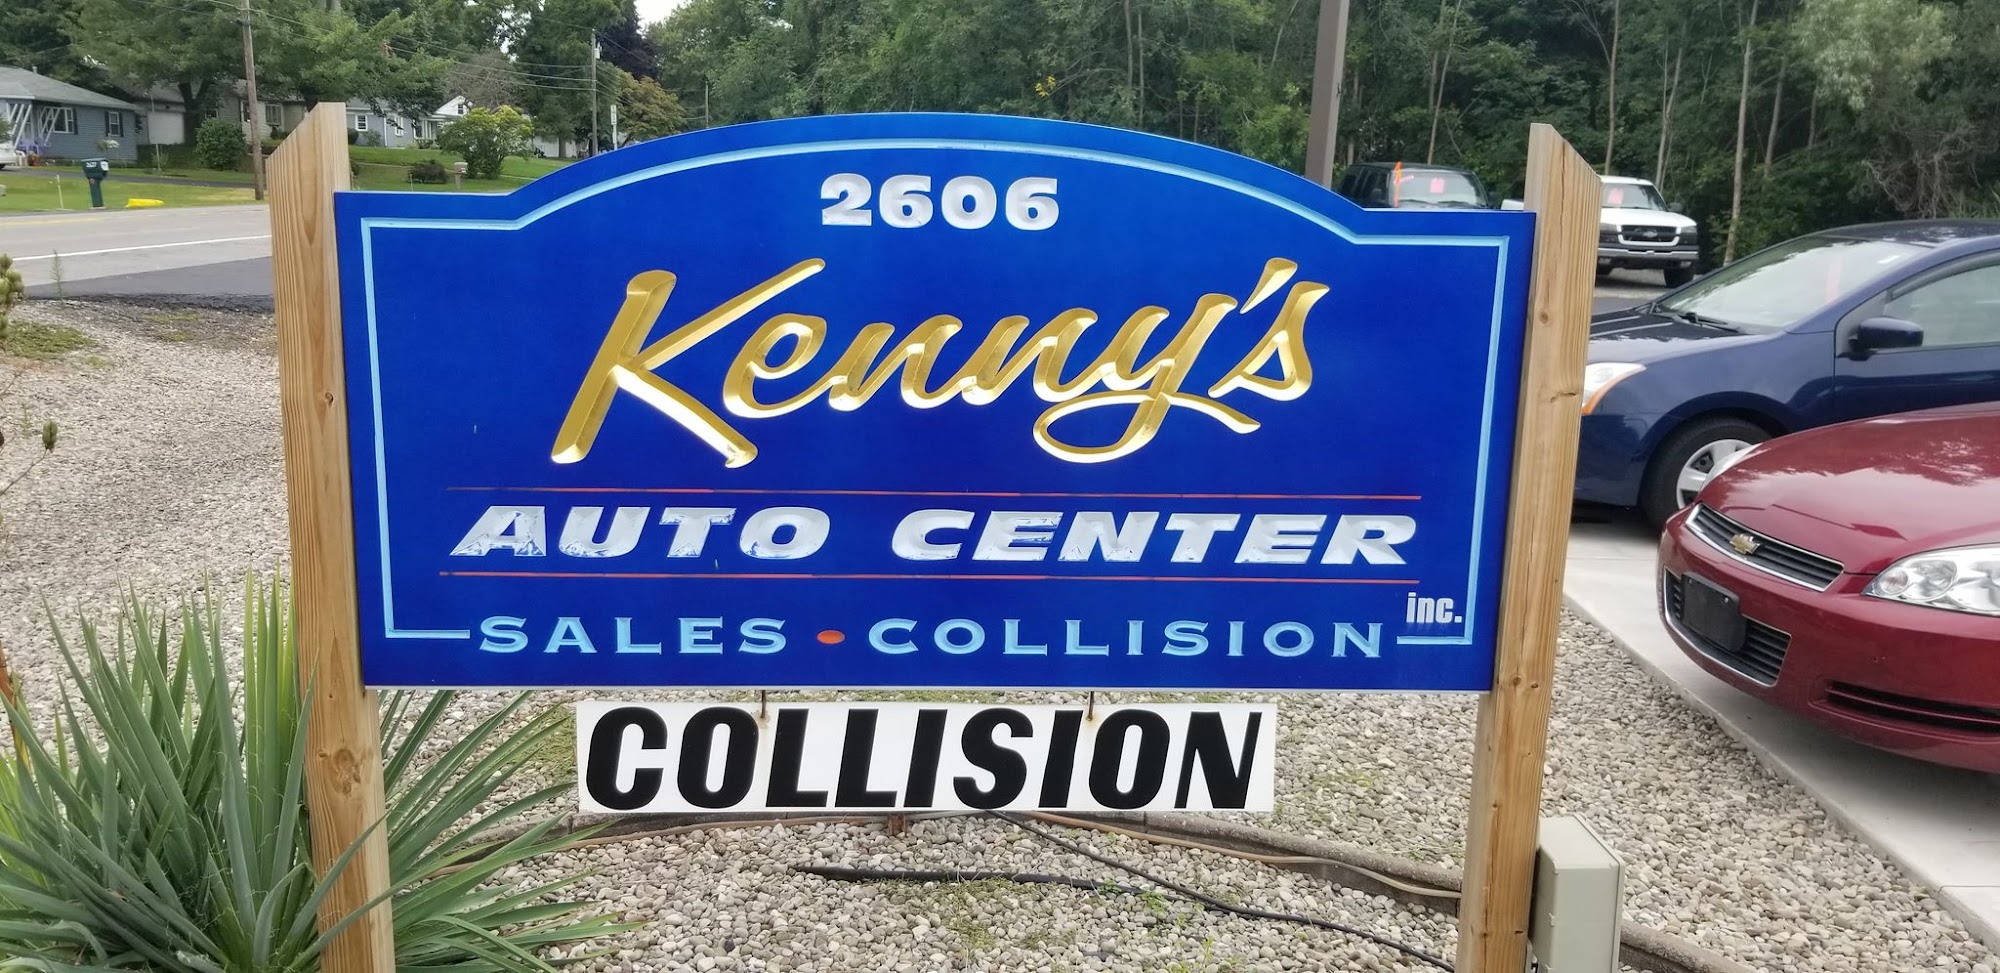 Kenny's Auto Center